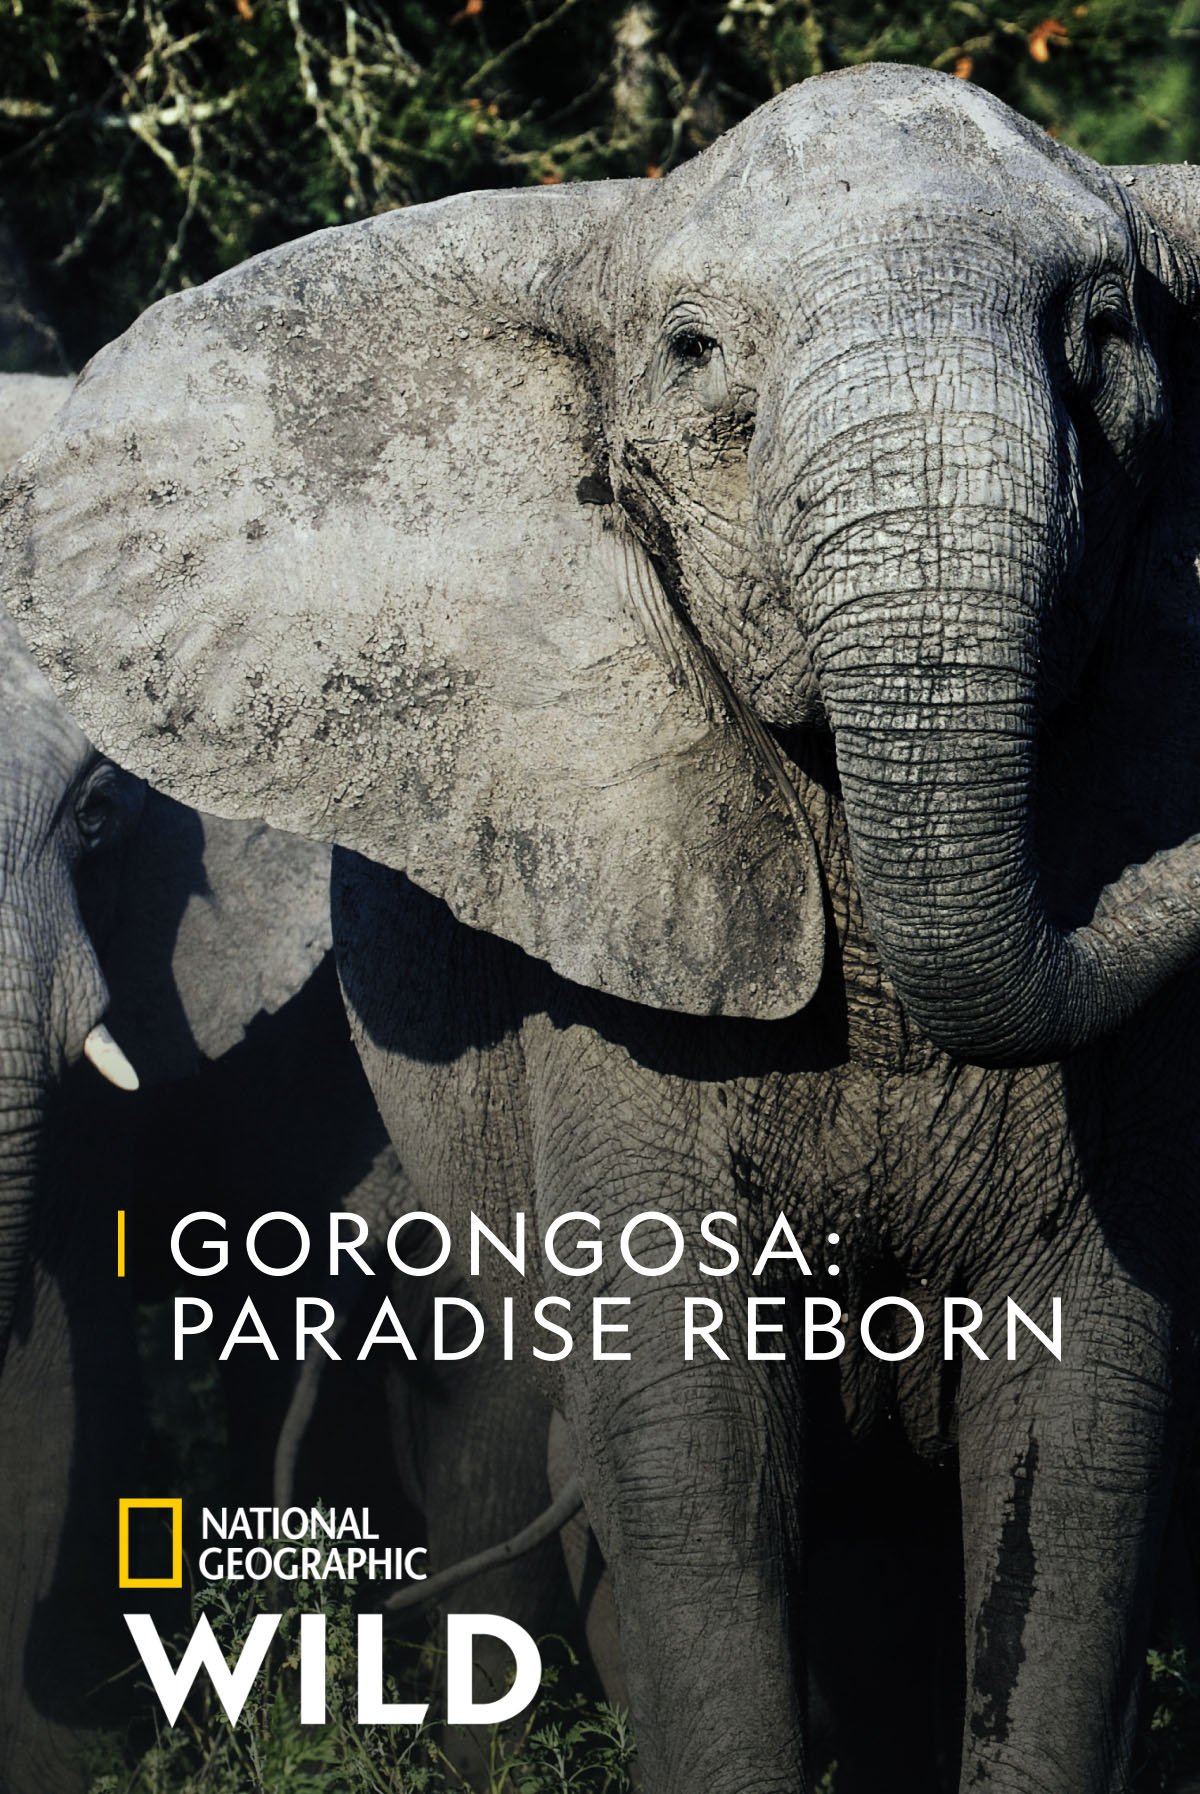 GORONGOSA: PARADISE REBORN